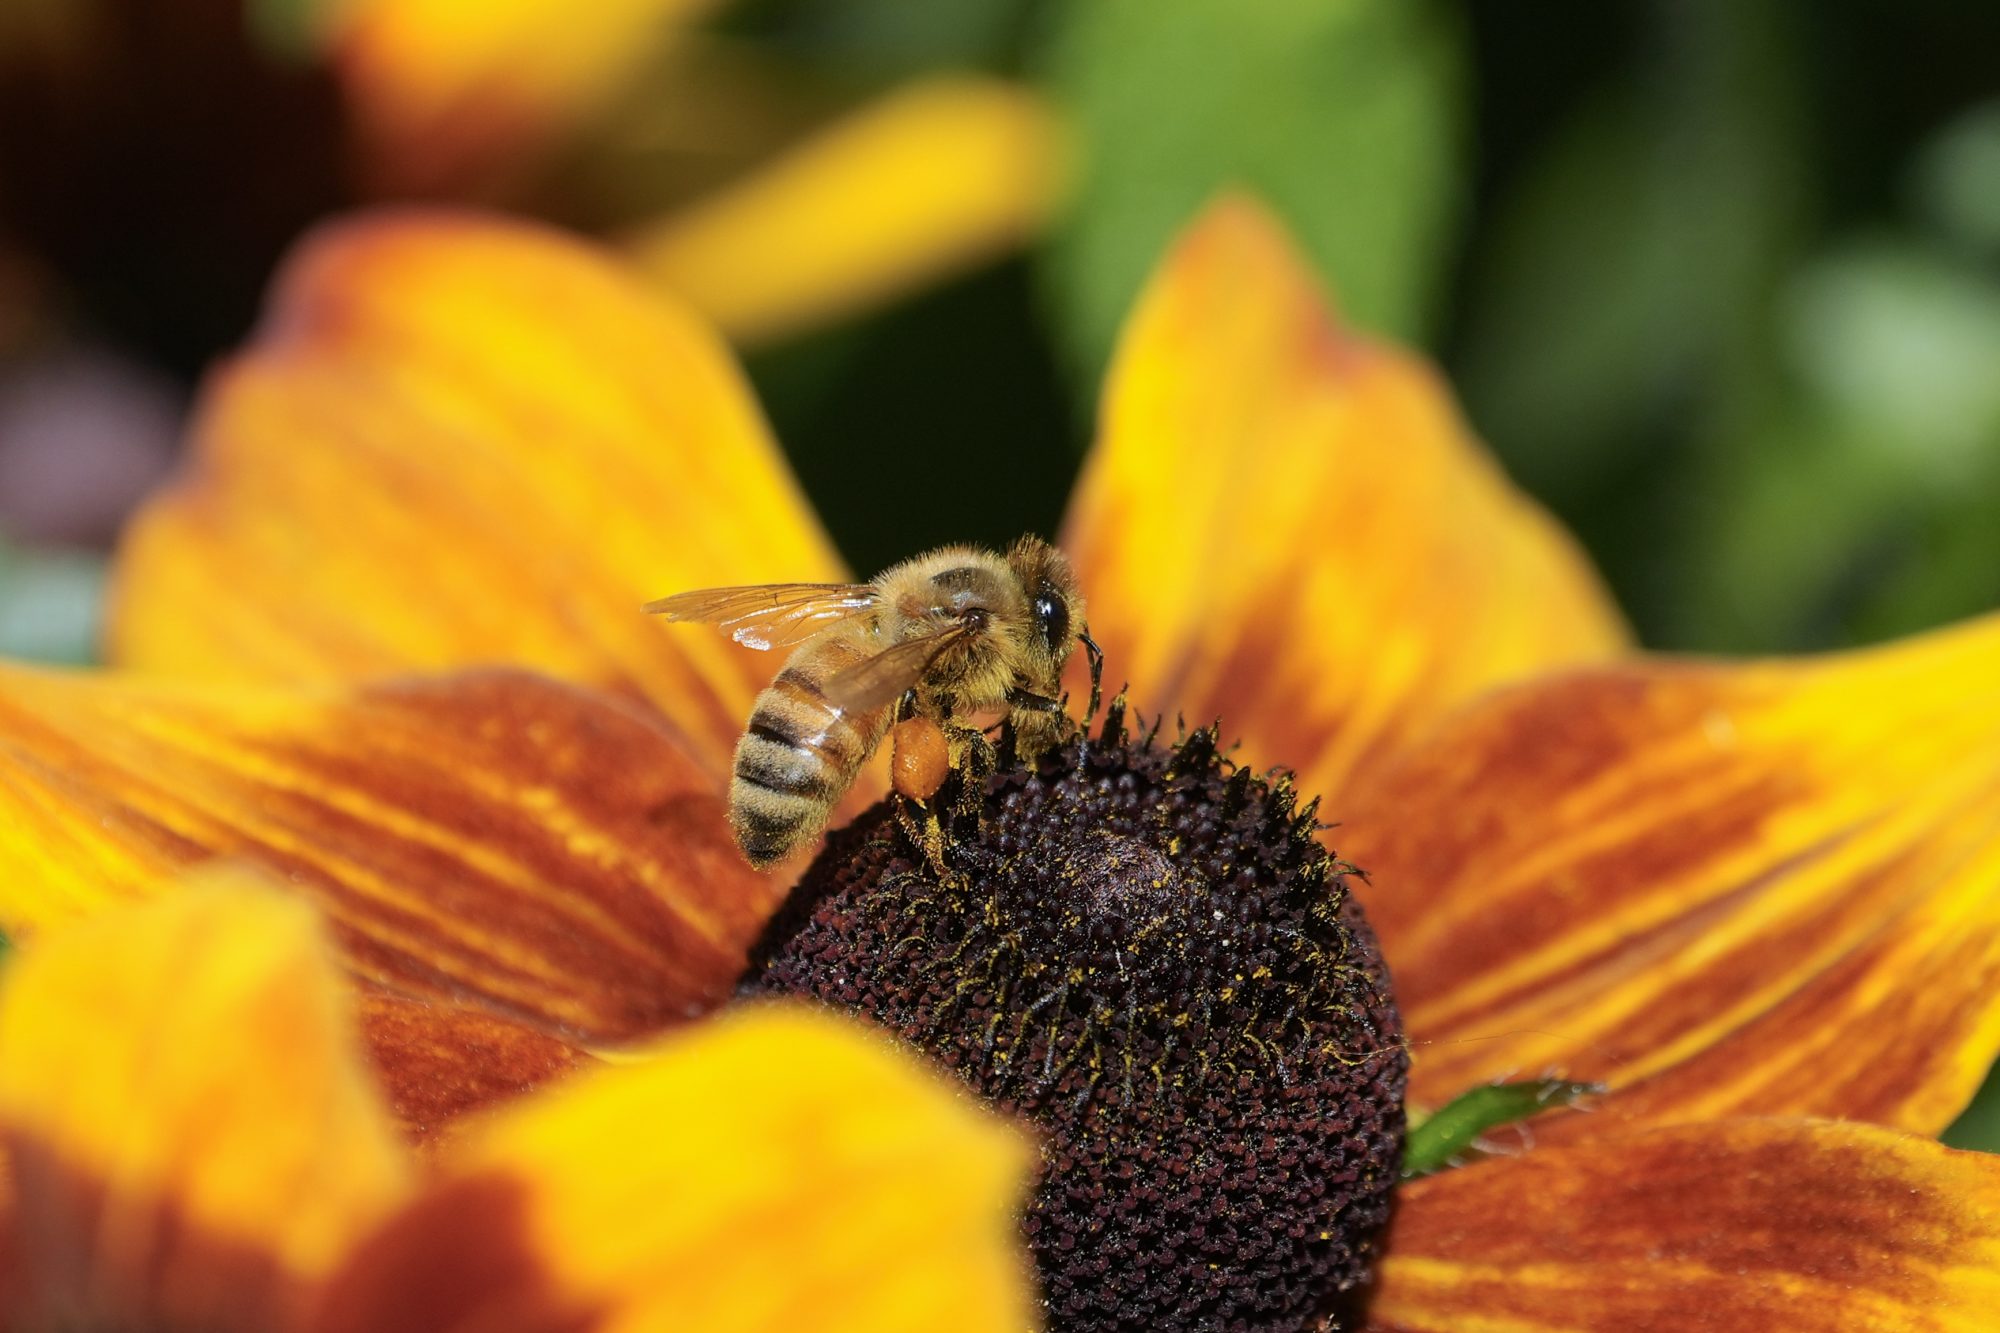 A honeybee on the core of an orange / yellow flower